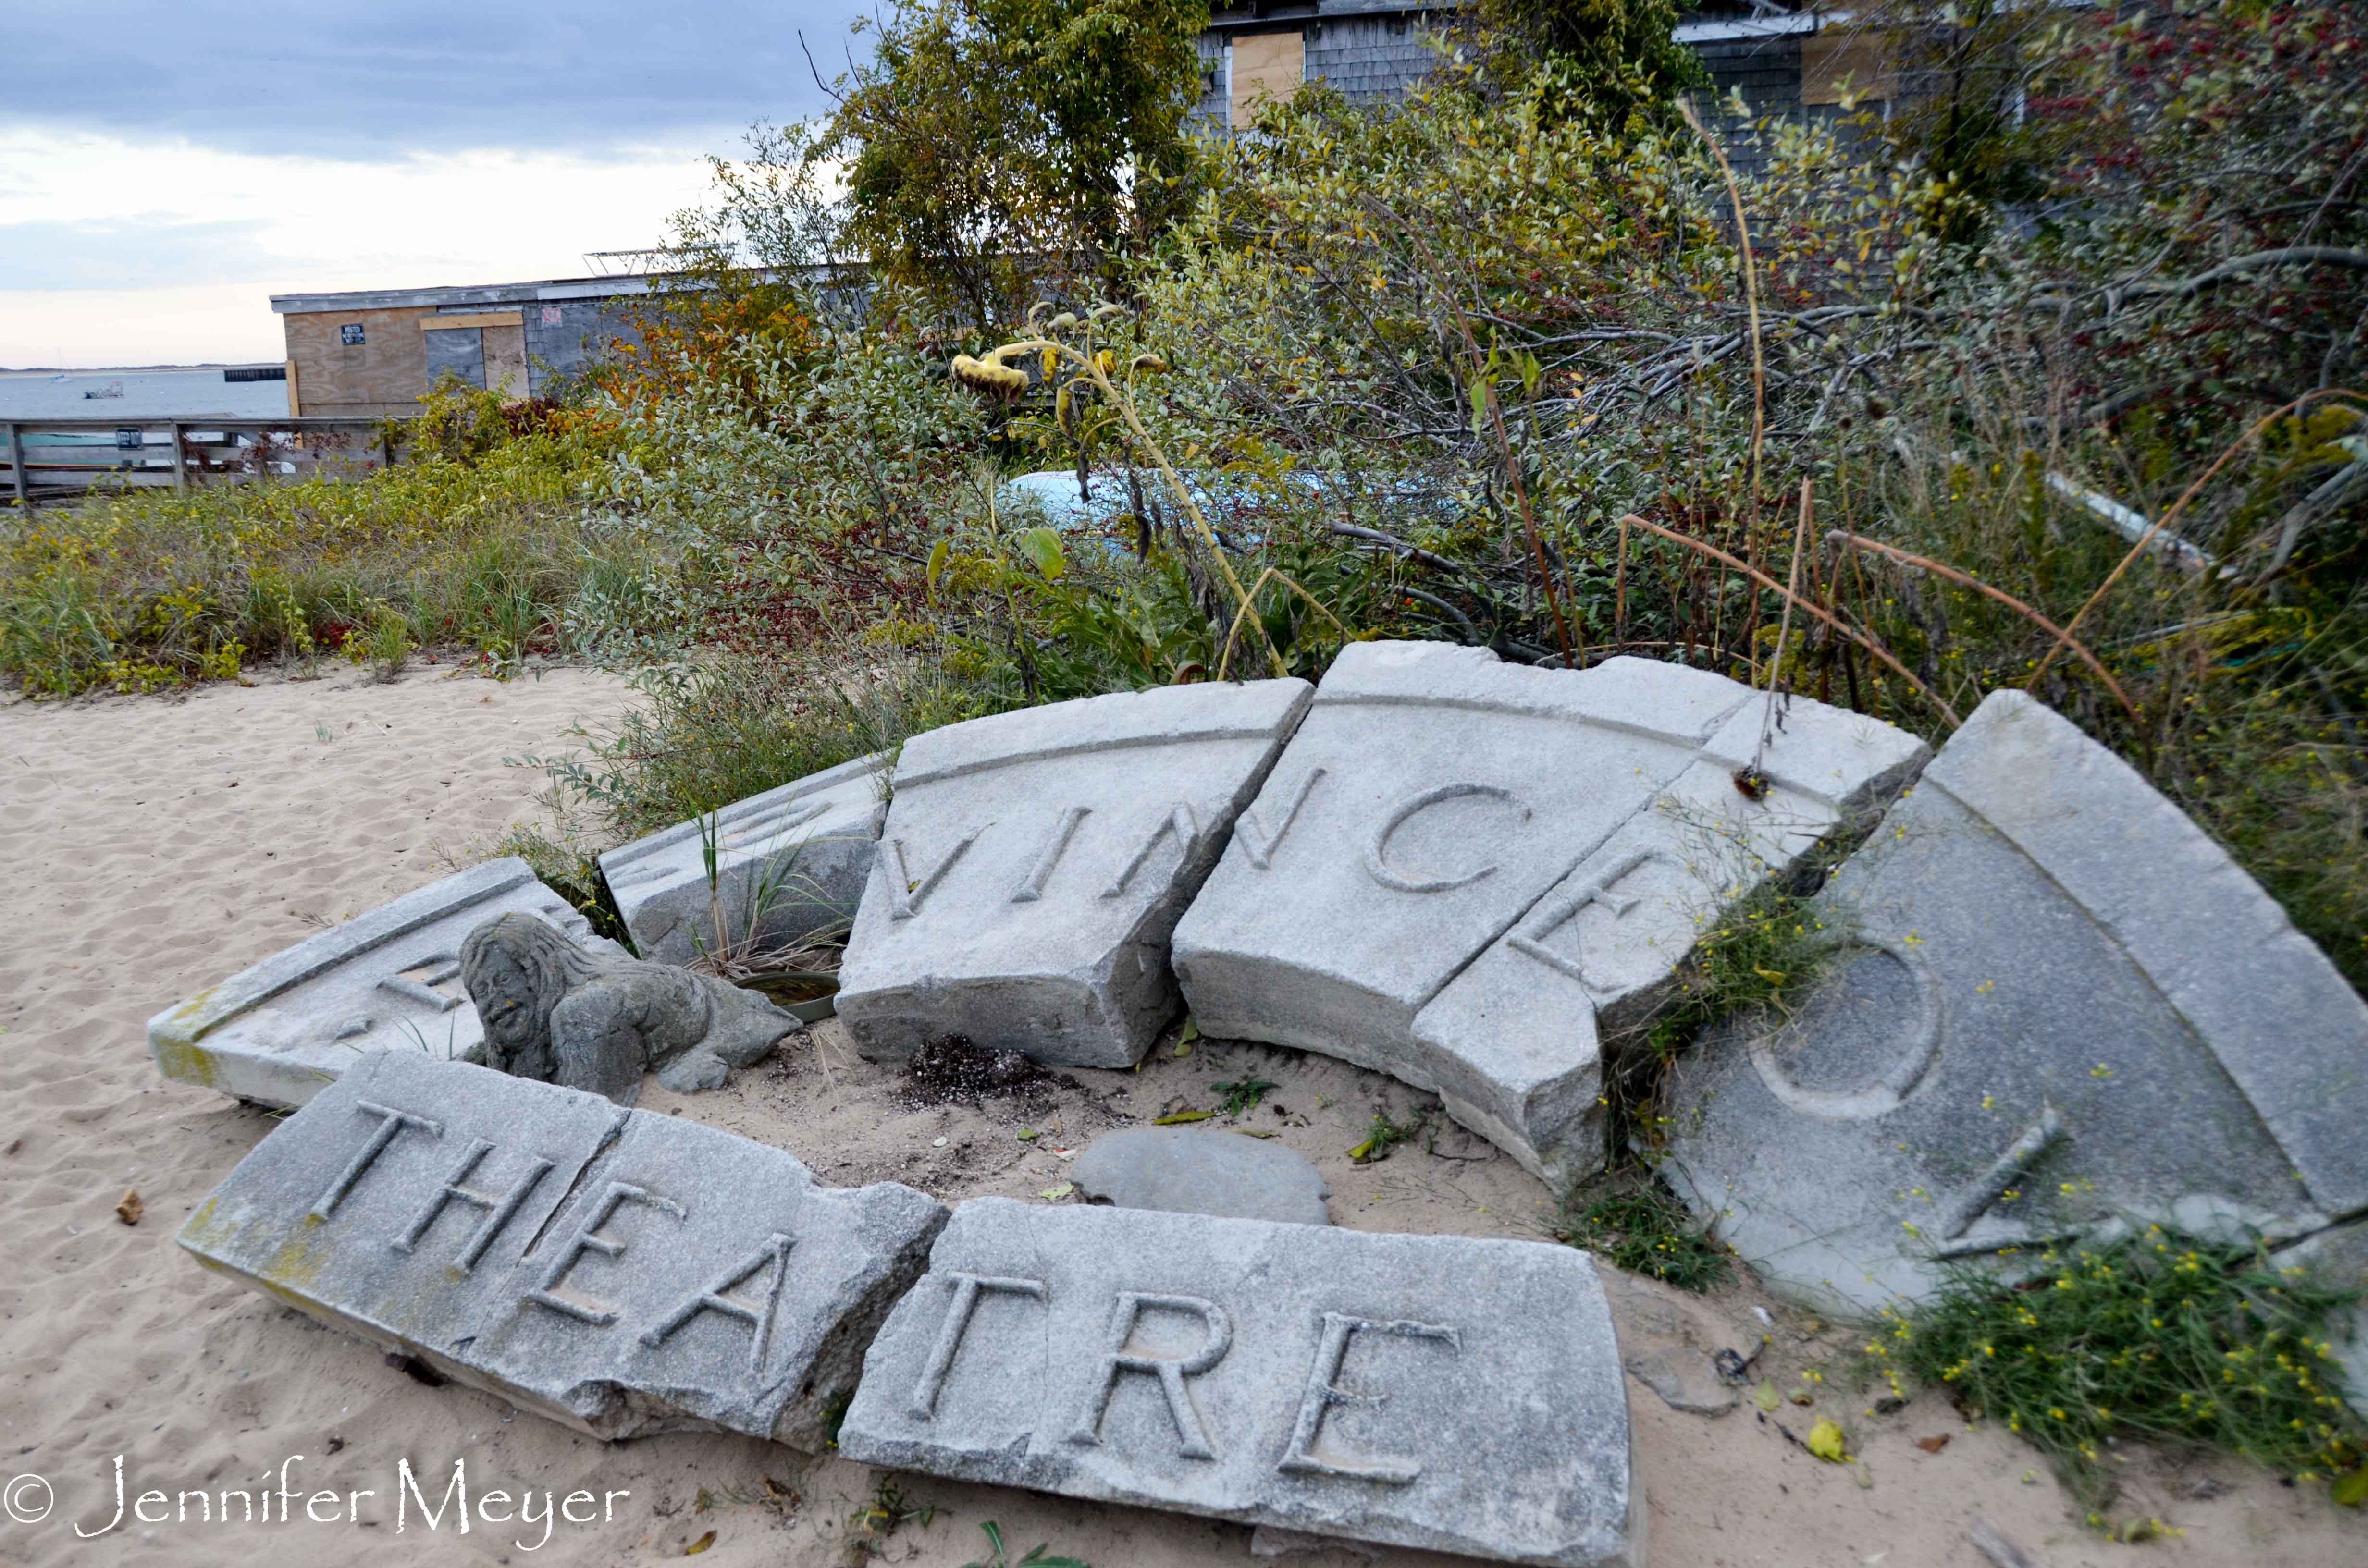 Broken theatre sign on the beach.